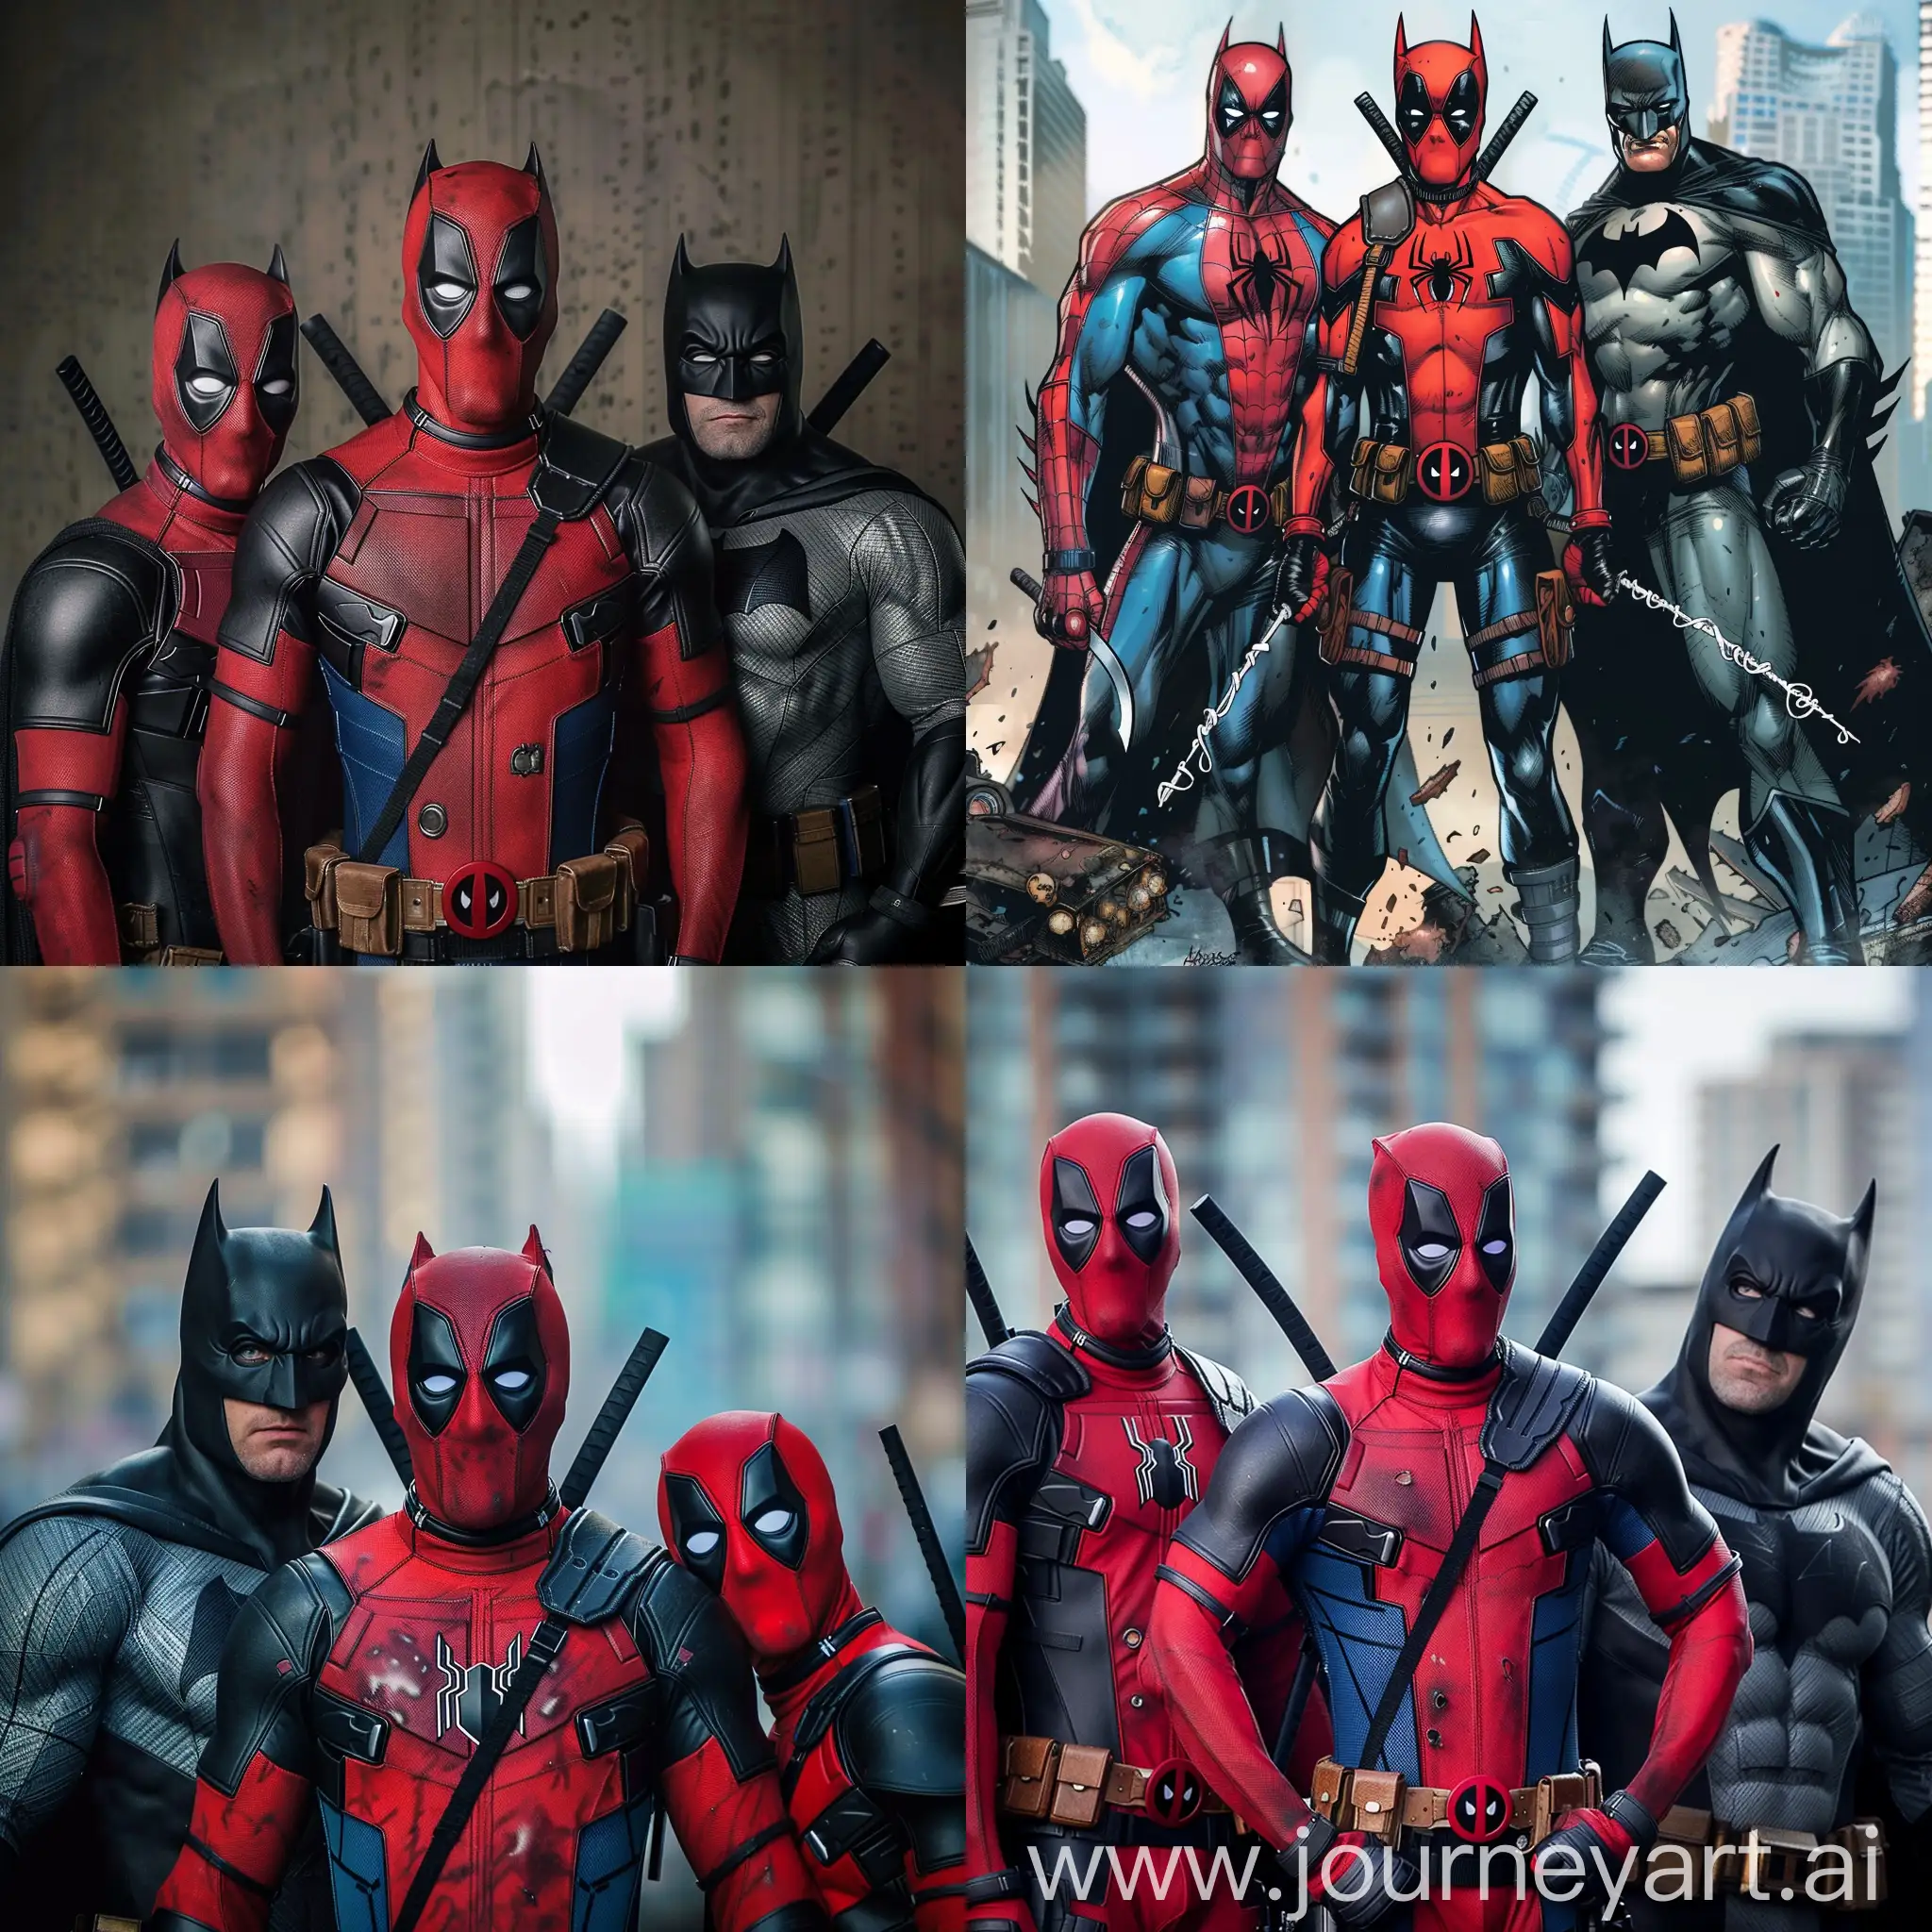 Superheroes-SpiderMan-Deadpool-and-Batman-in-Action